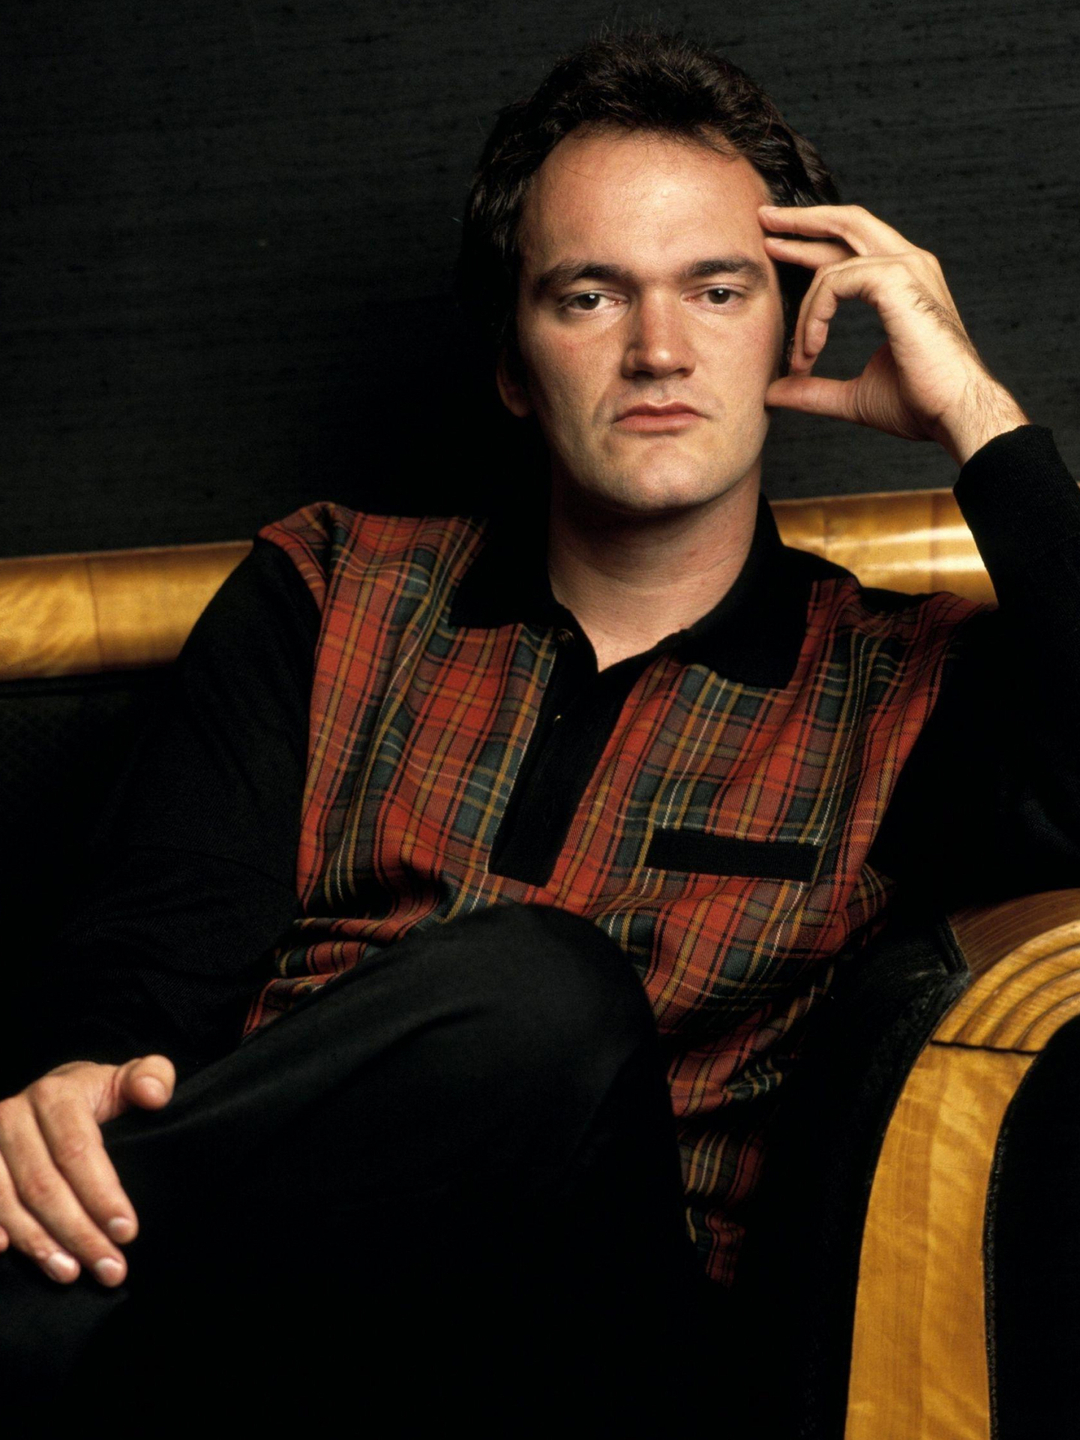 Quentin Tarantino education